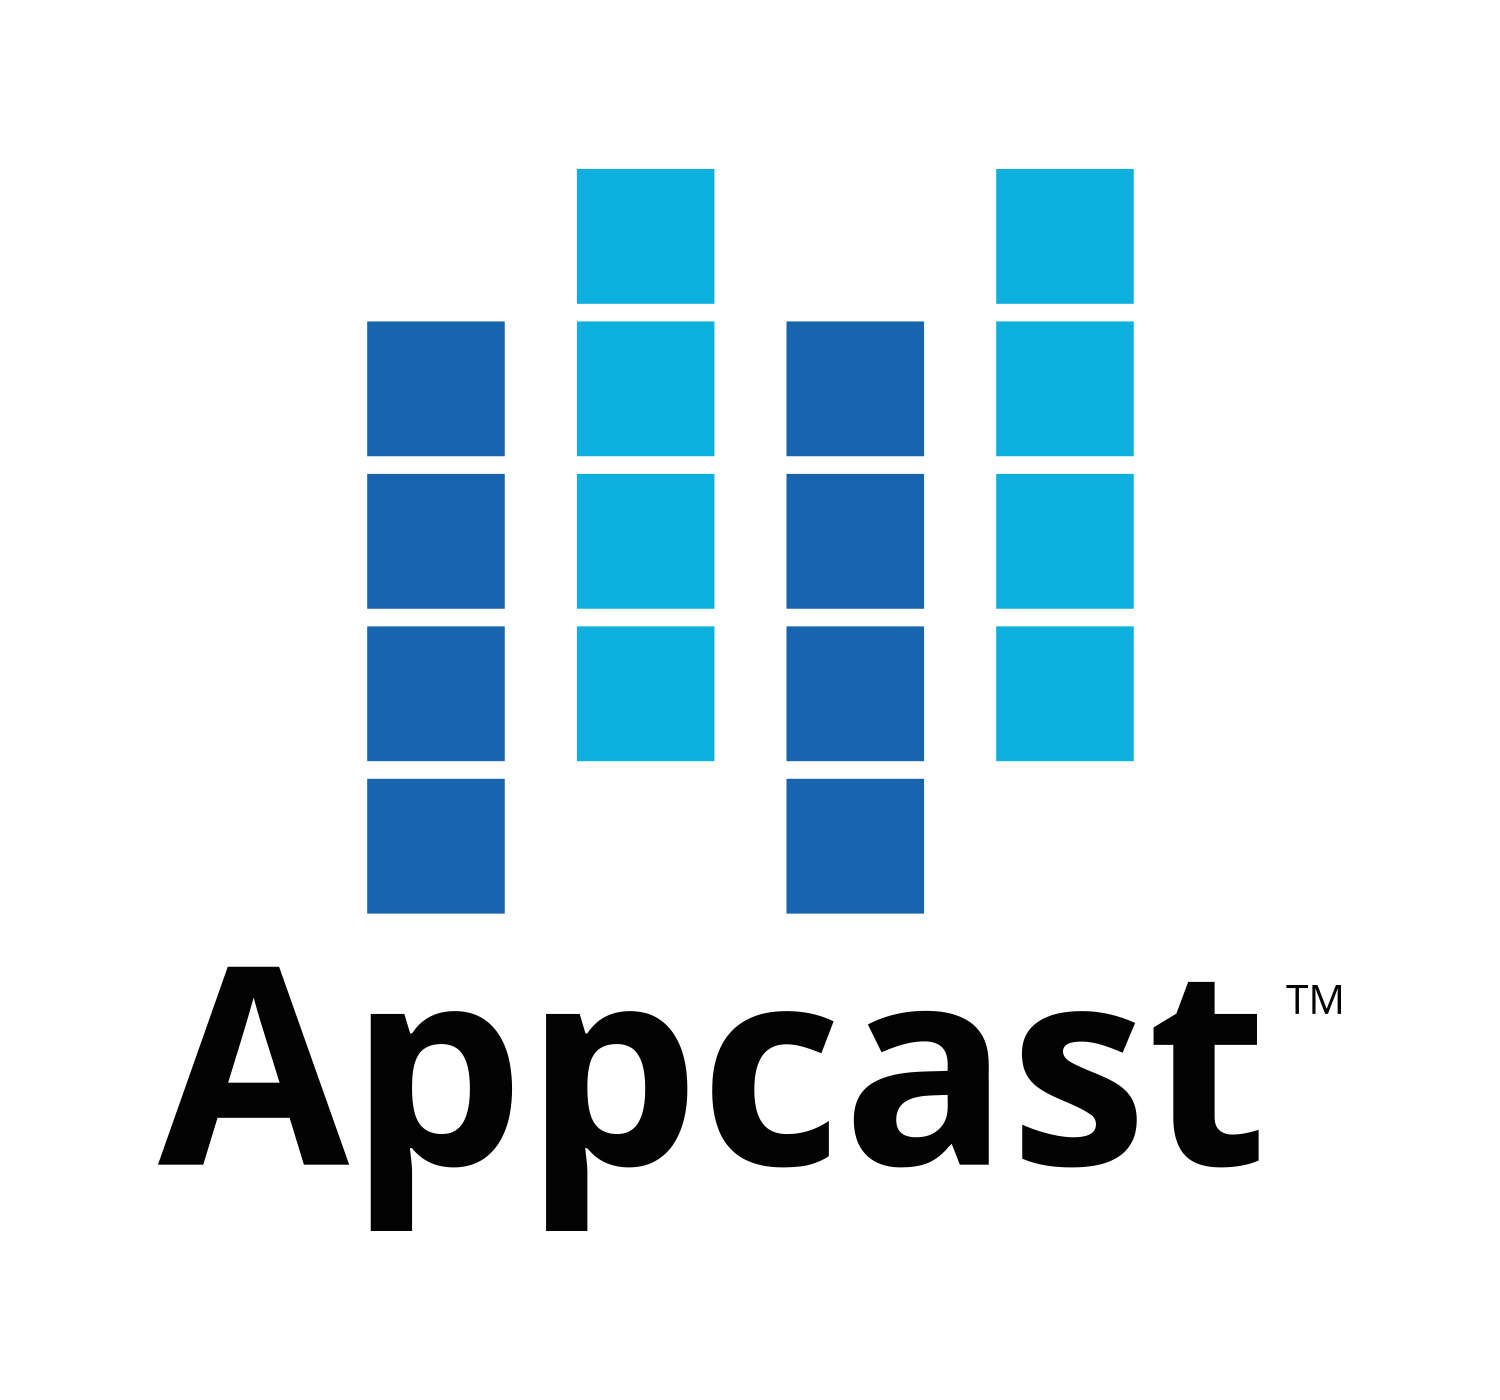 Appcast - Crunchbase Company Profile & Funding